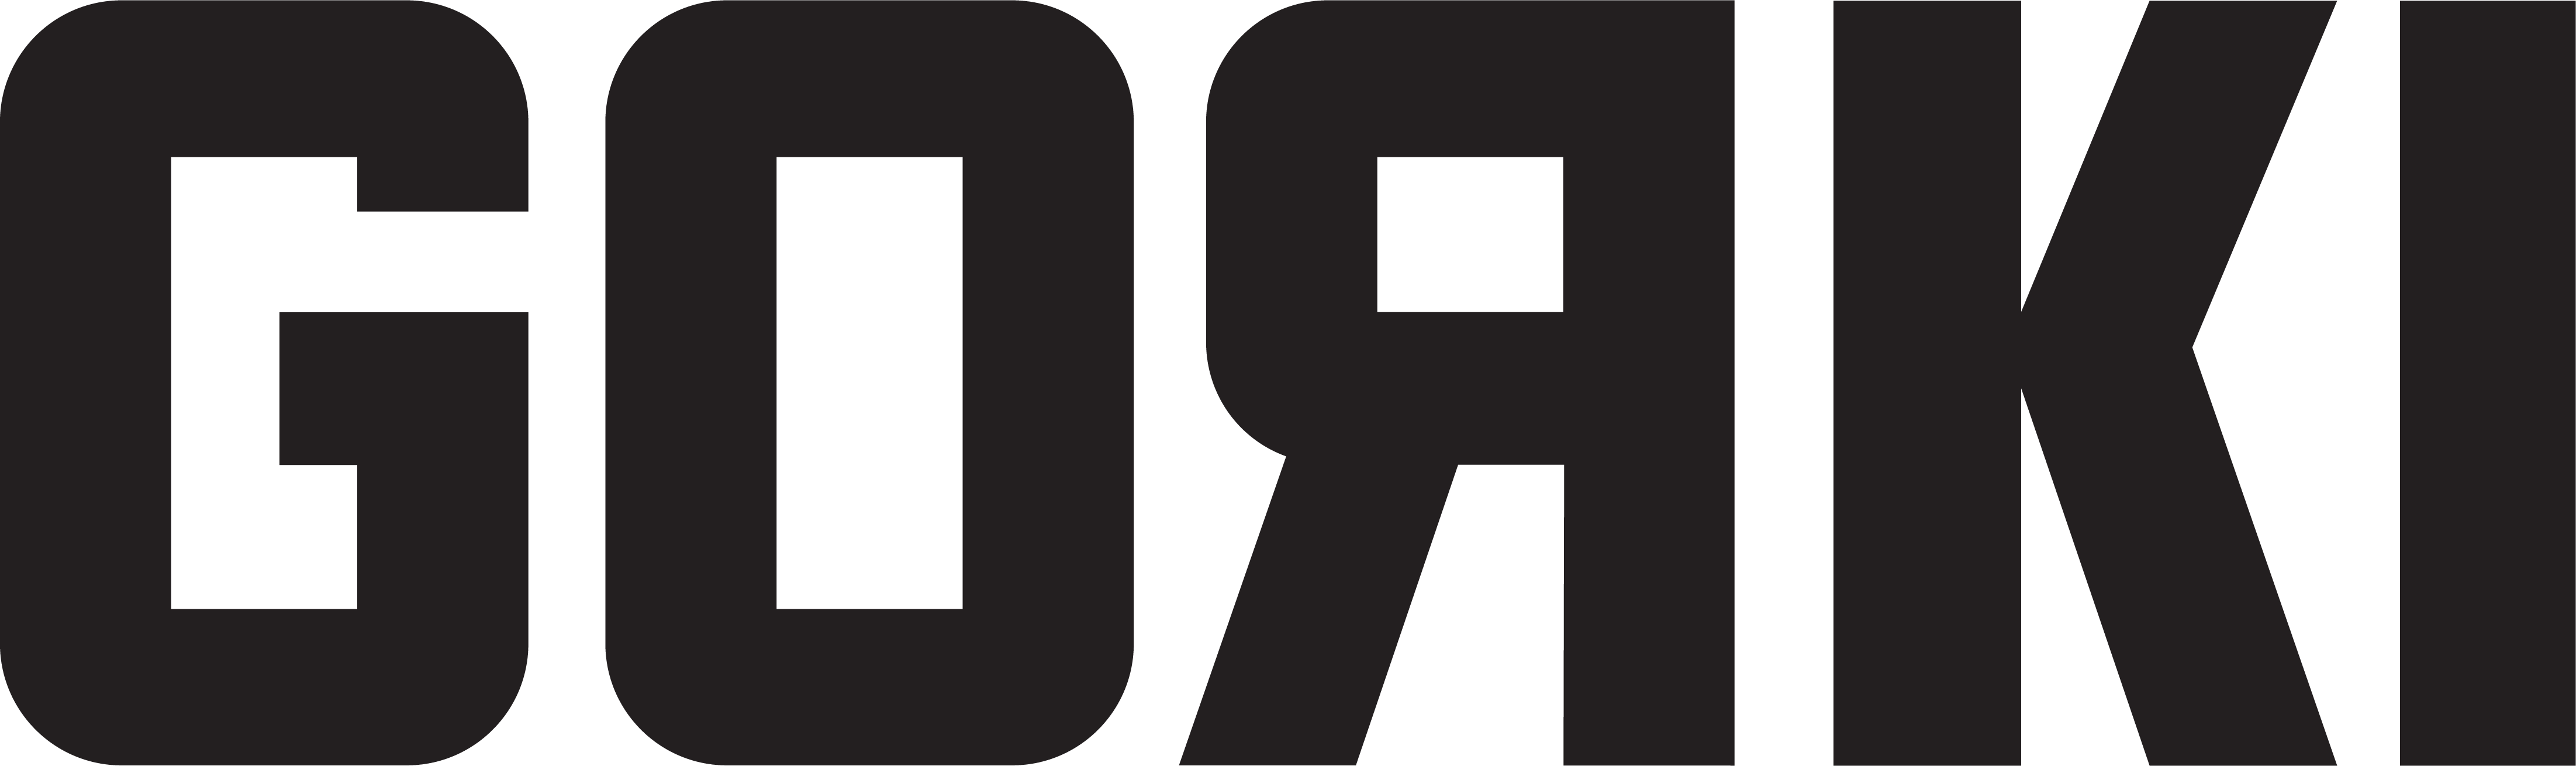 Gorki Logo